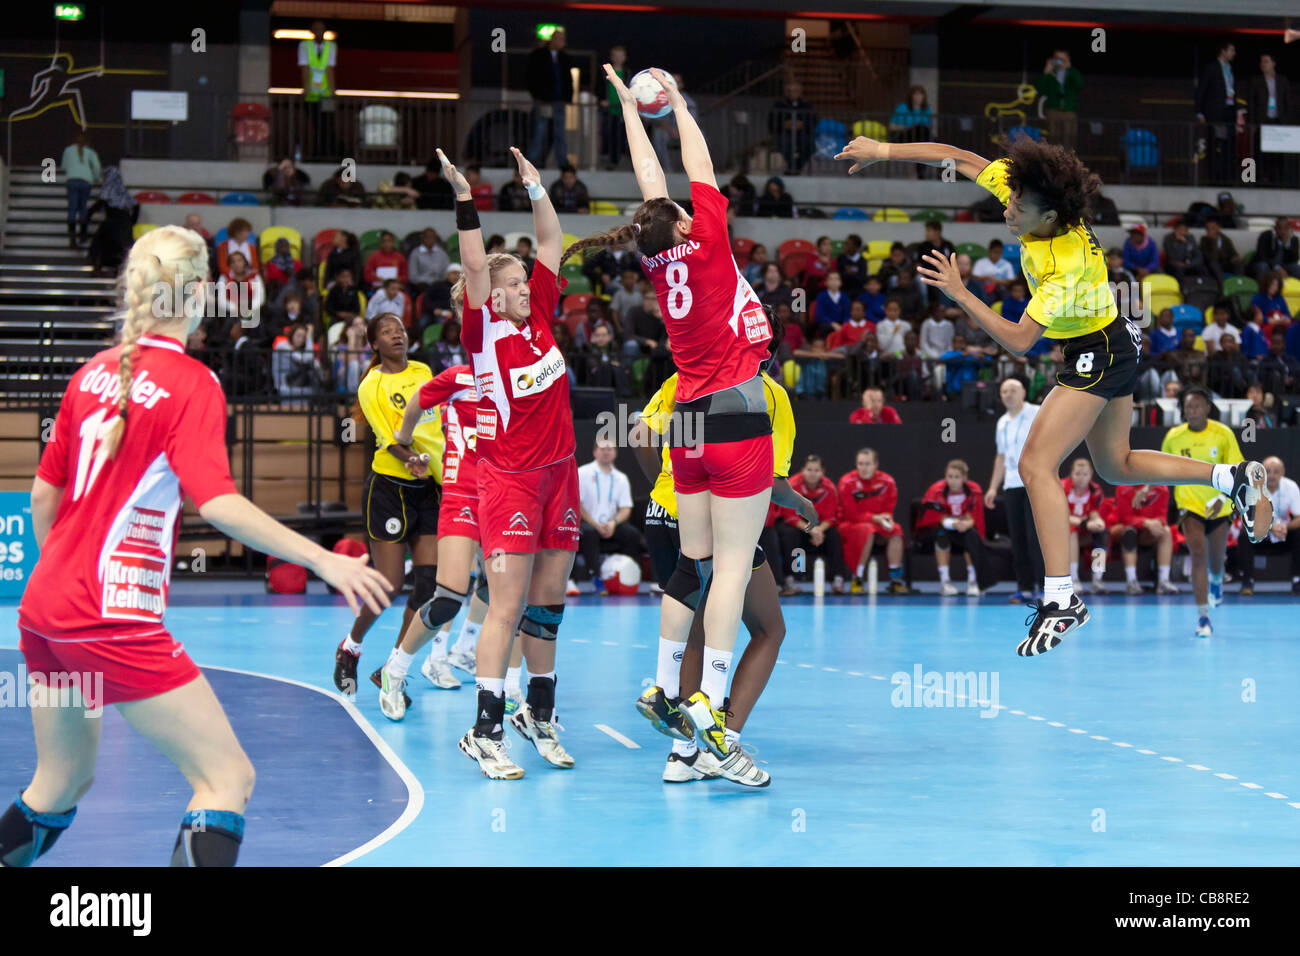 Angola / Österreich bei der Frauen London Handball Cup. Bei der Handball-Arena, UK statt. Stockfoto